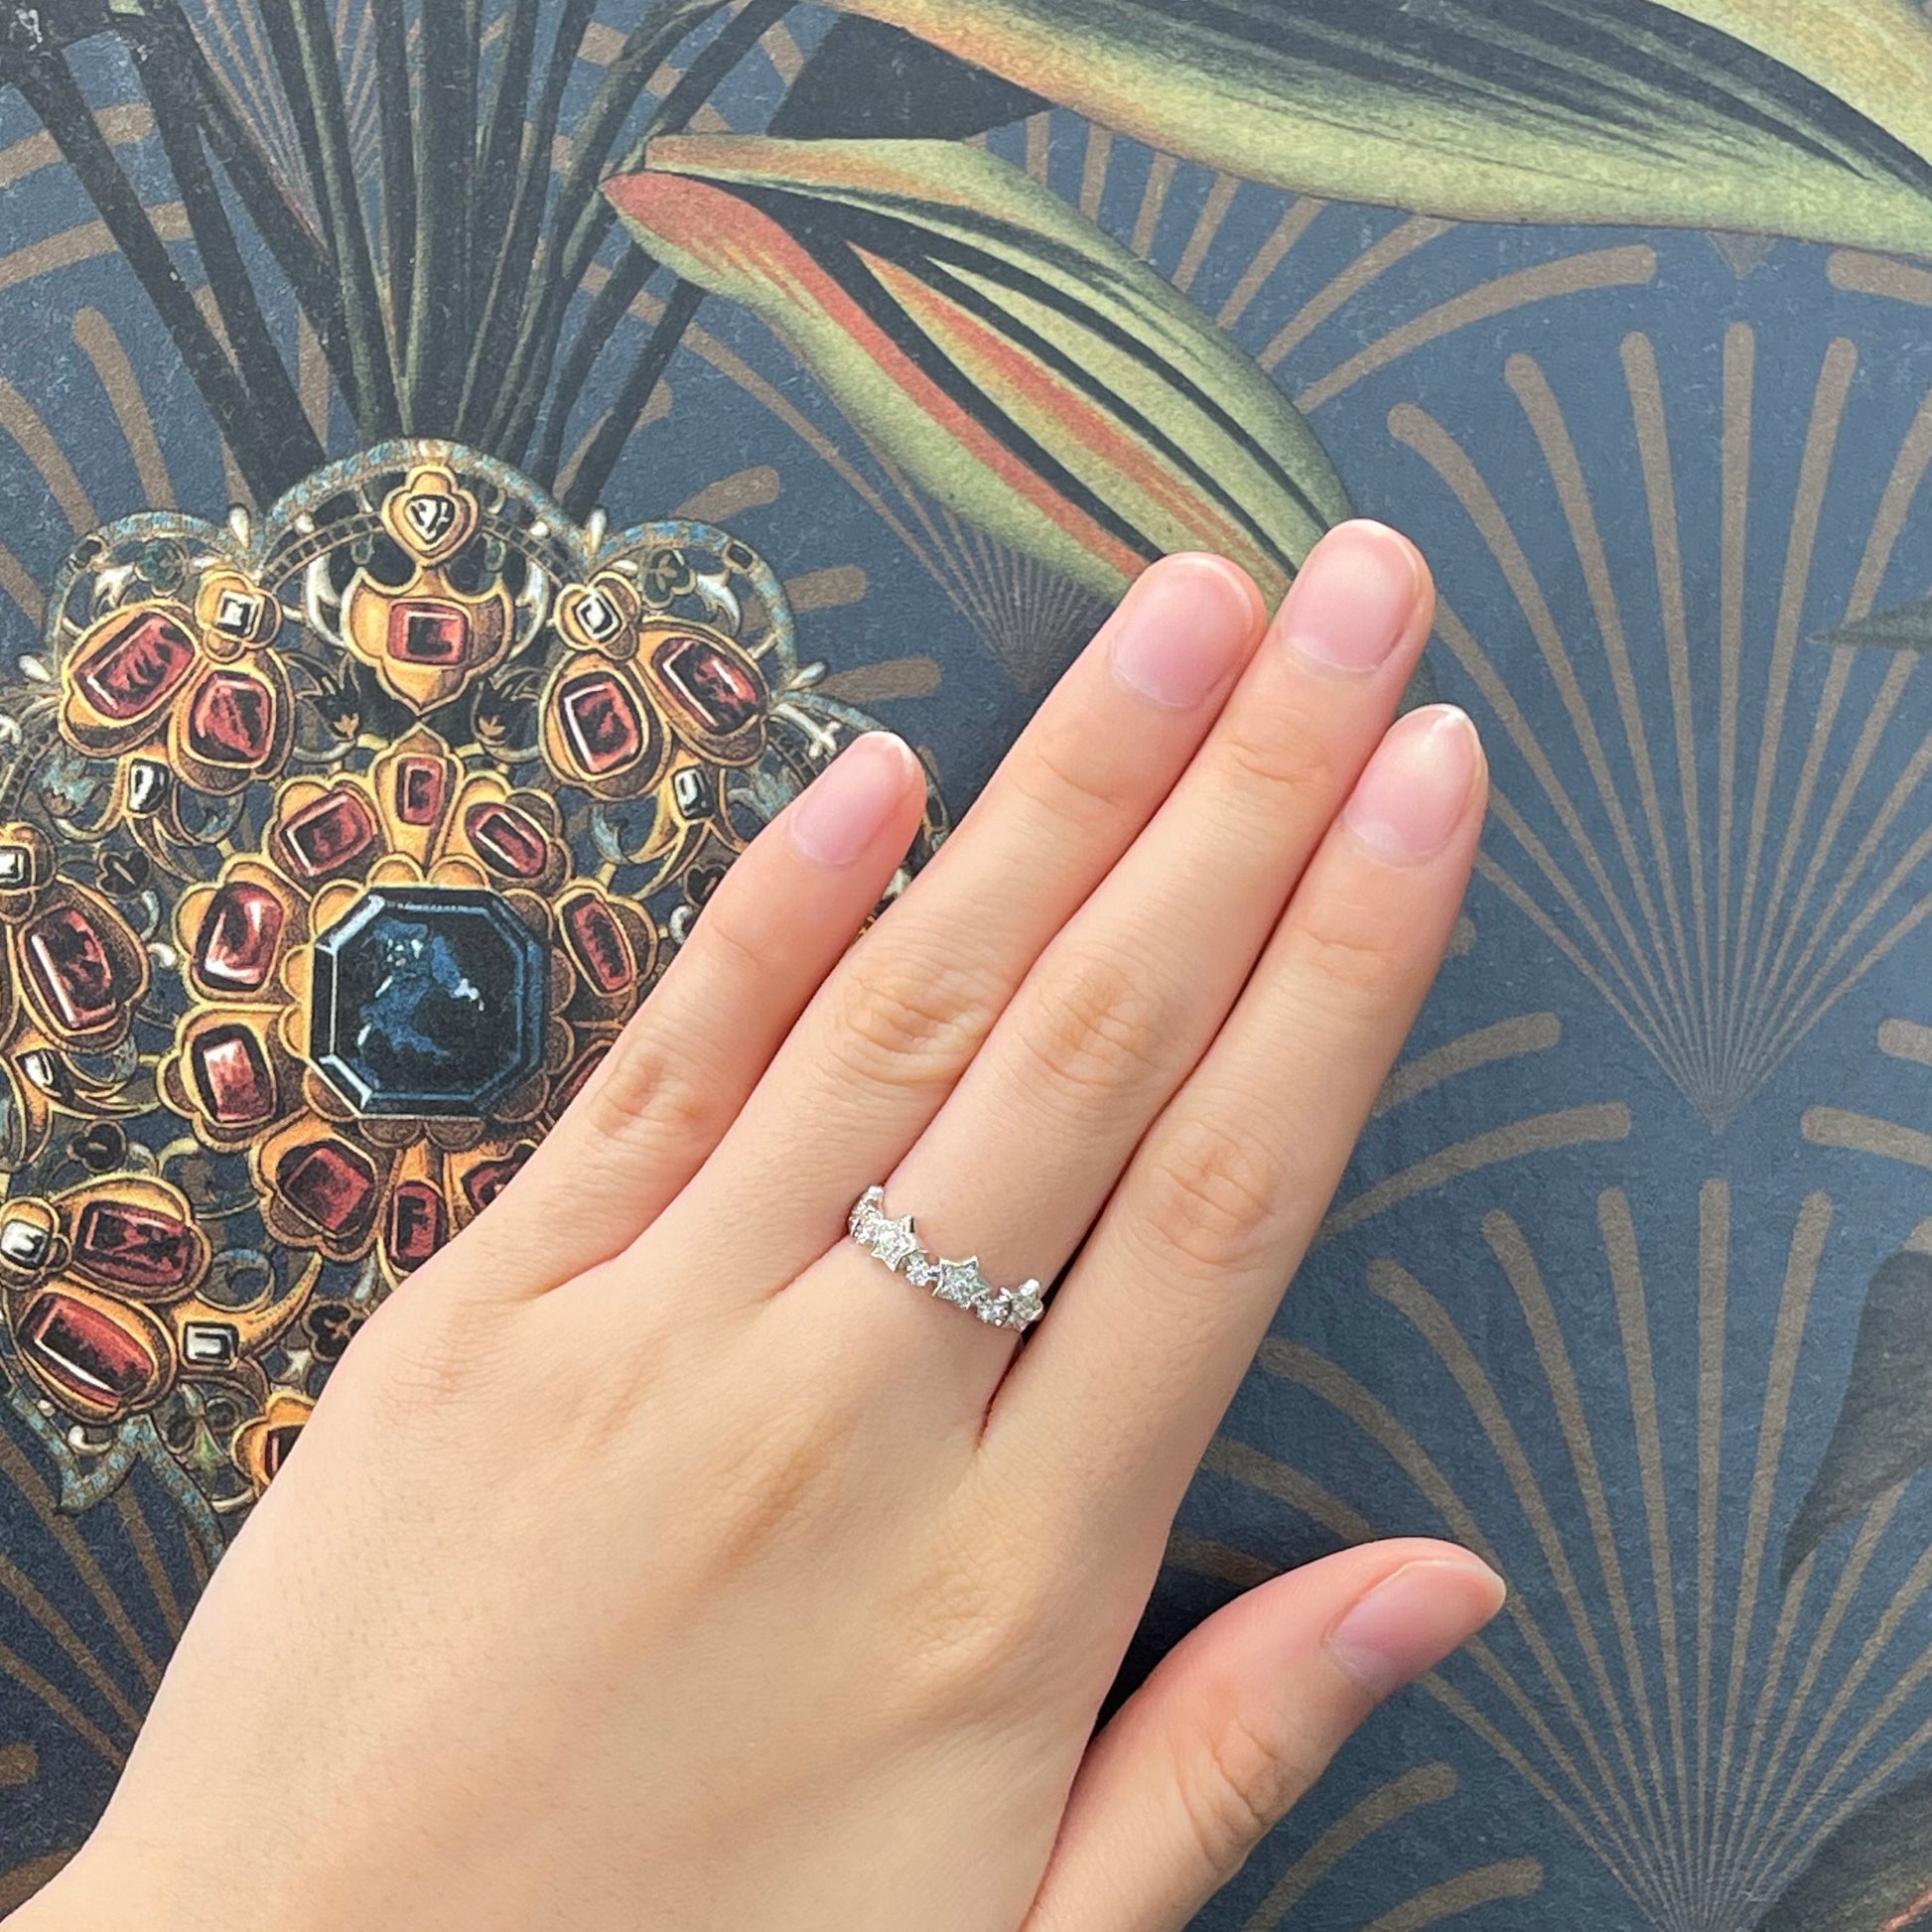 18k白金鑽石星形鑽石戒指在中指 18k White Gold Stars Diamond Ring on middle finger